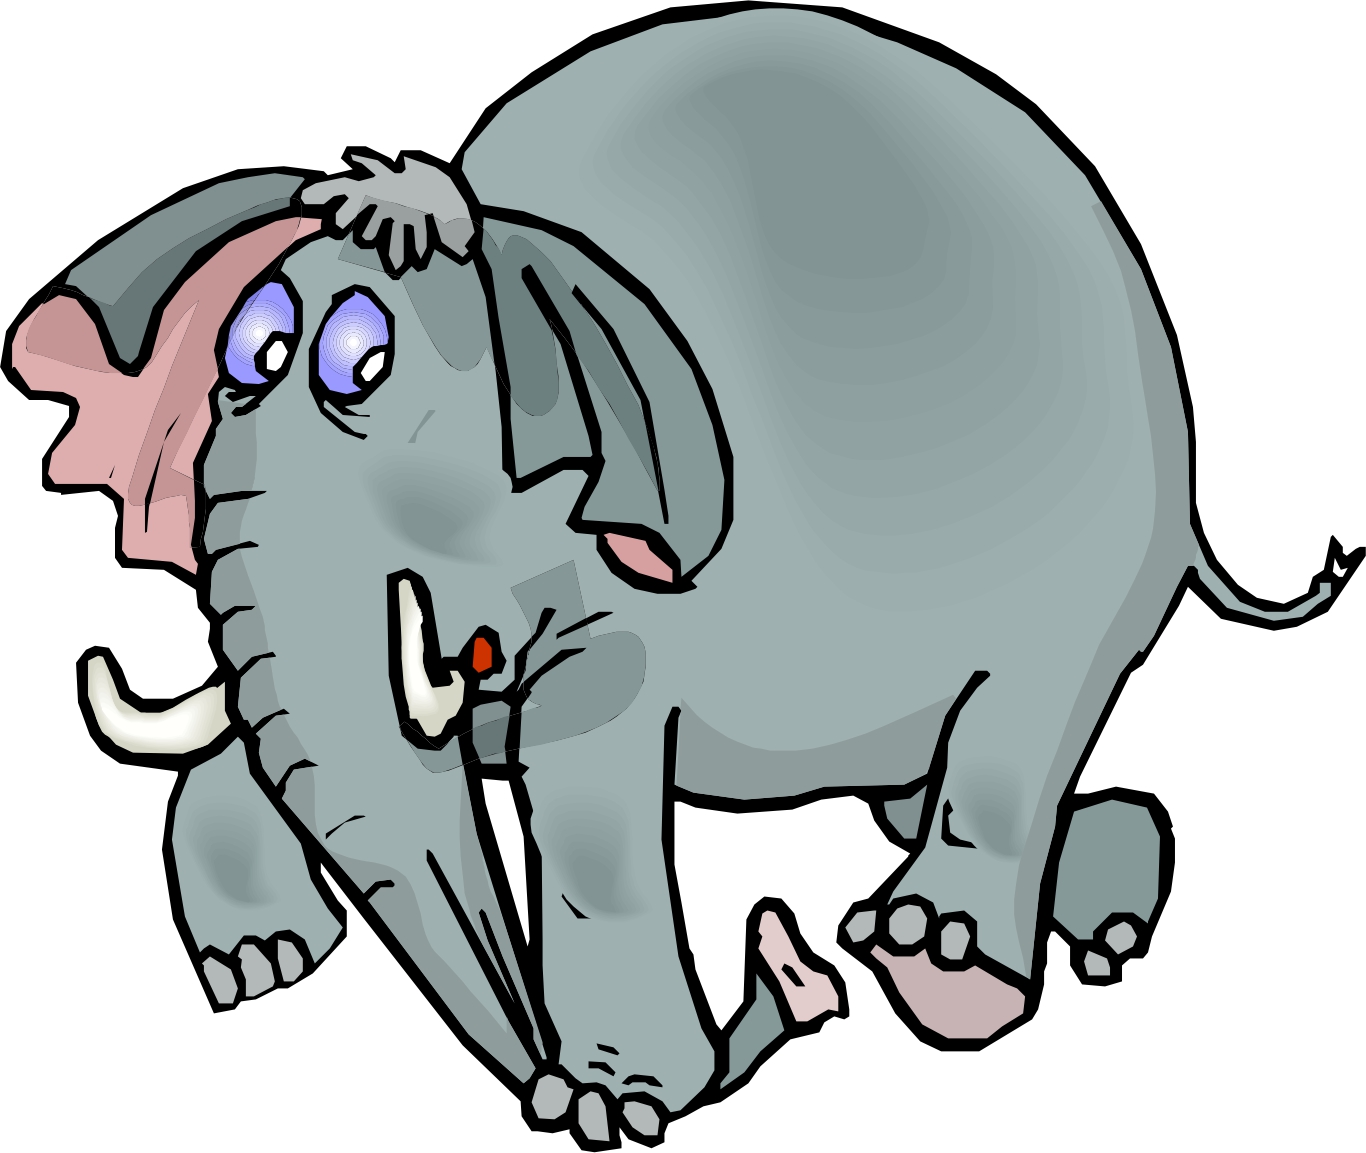 Cartoon Images Of Elephants - ClipArt Best